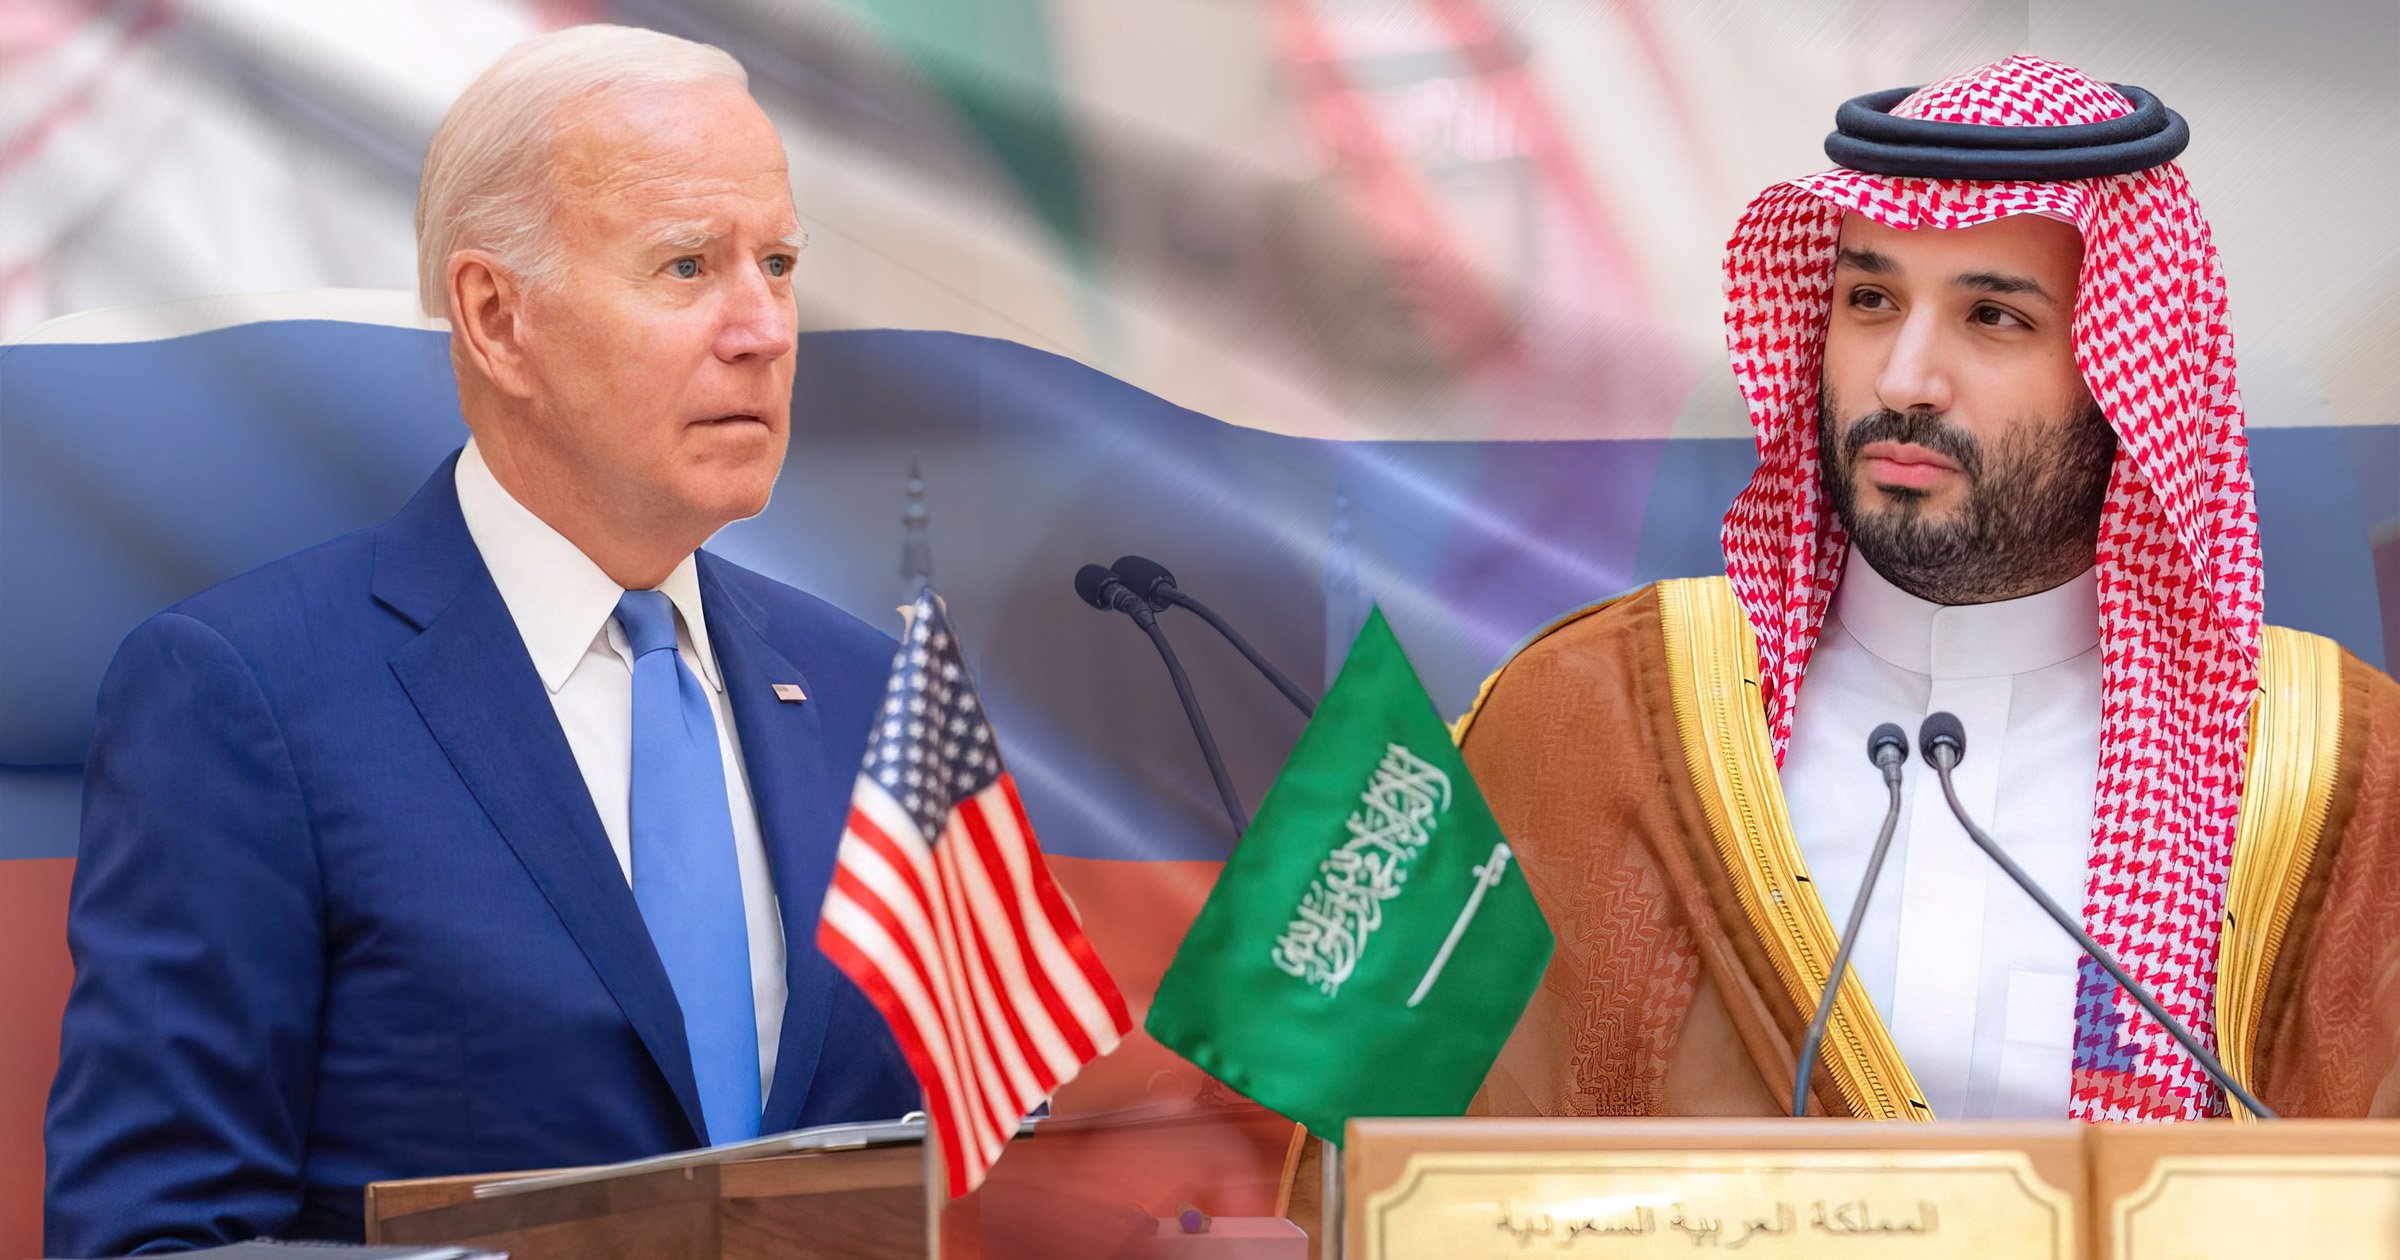 Big Latest News! Joe Biden To "Re-evaluate" Ties With Saudi Arabia After OPEC Snub